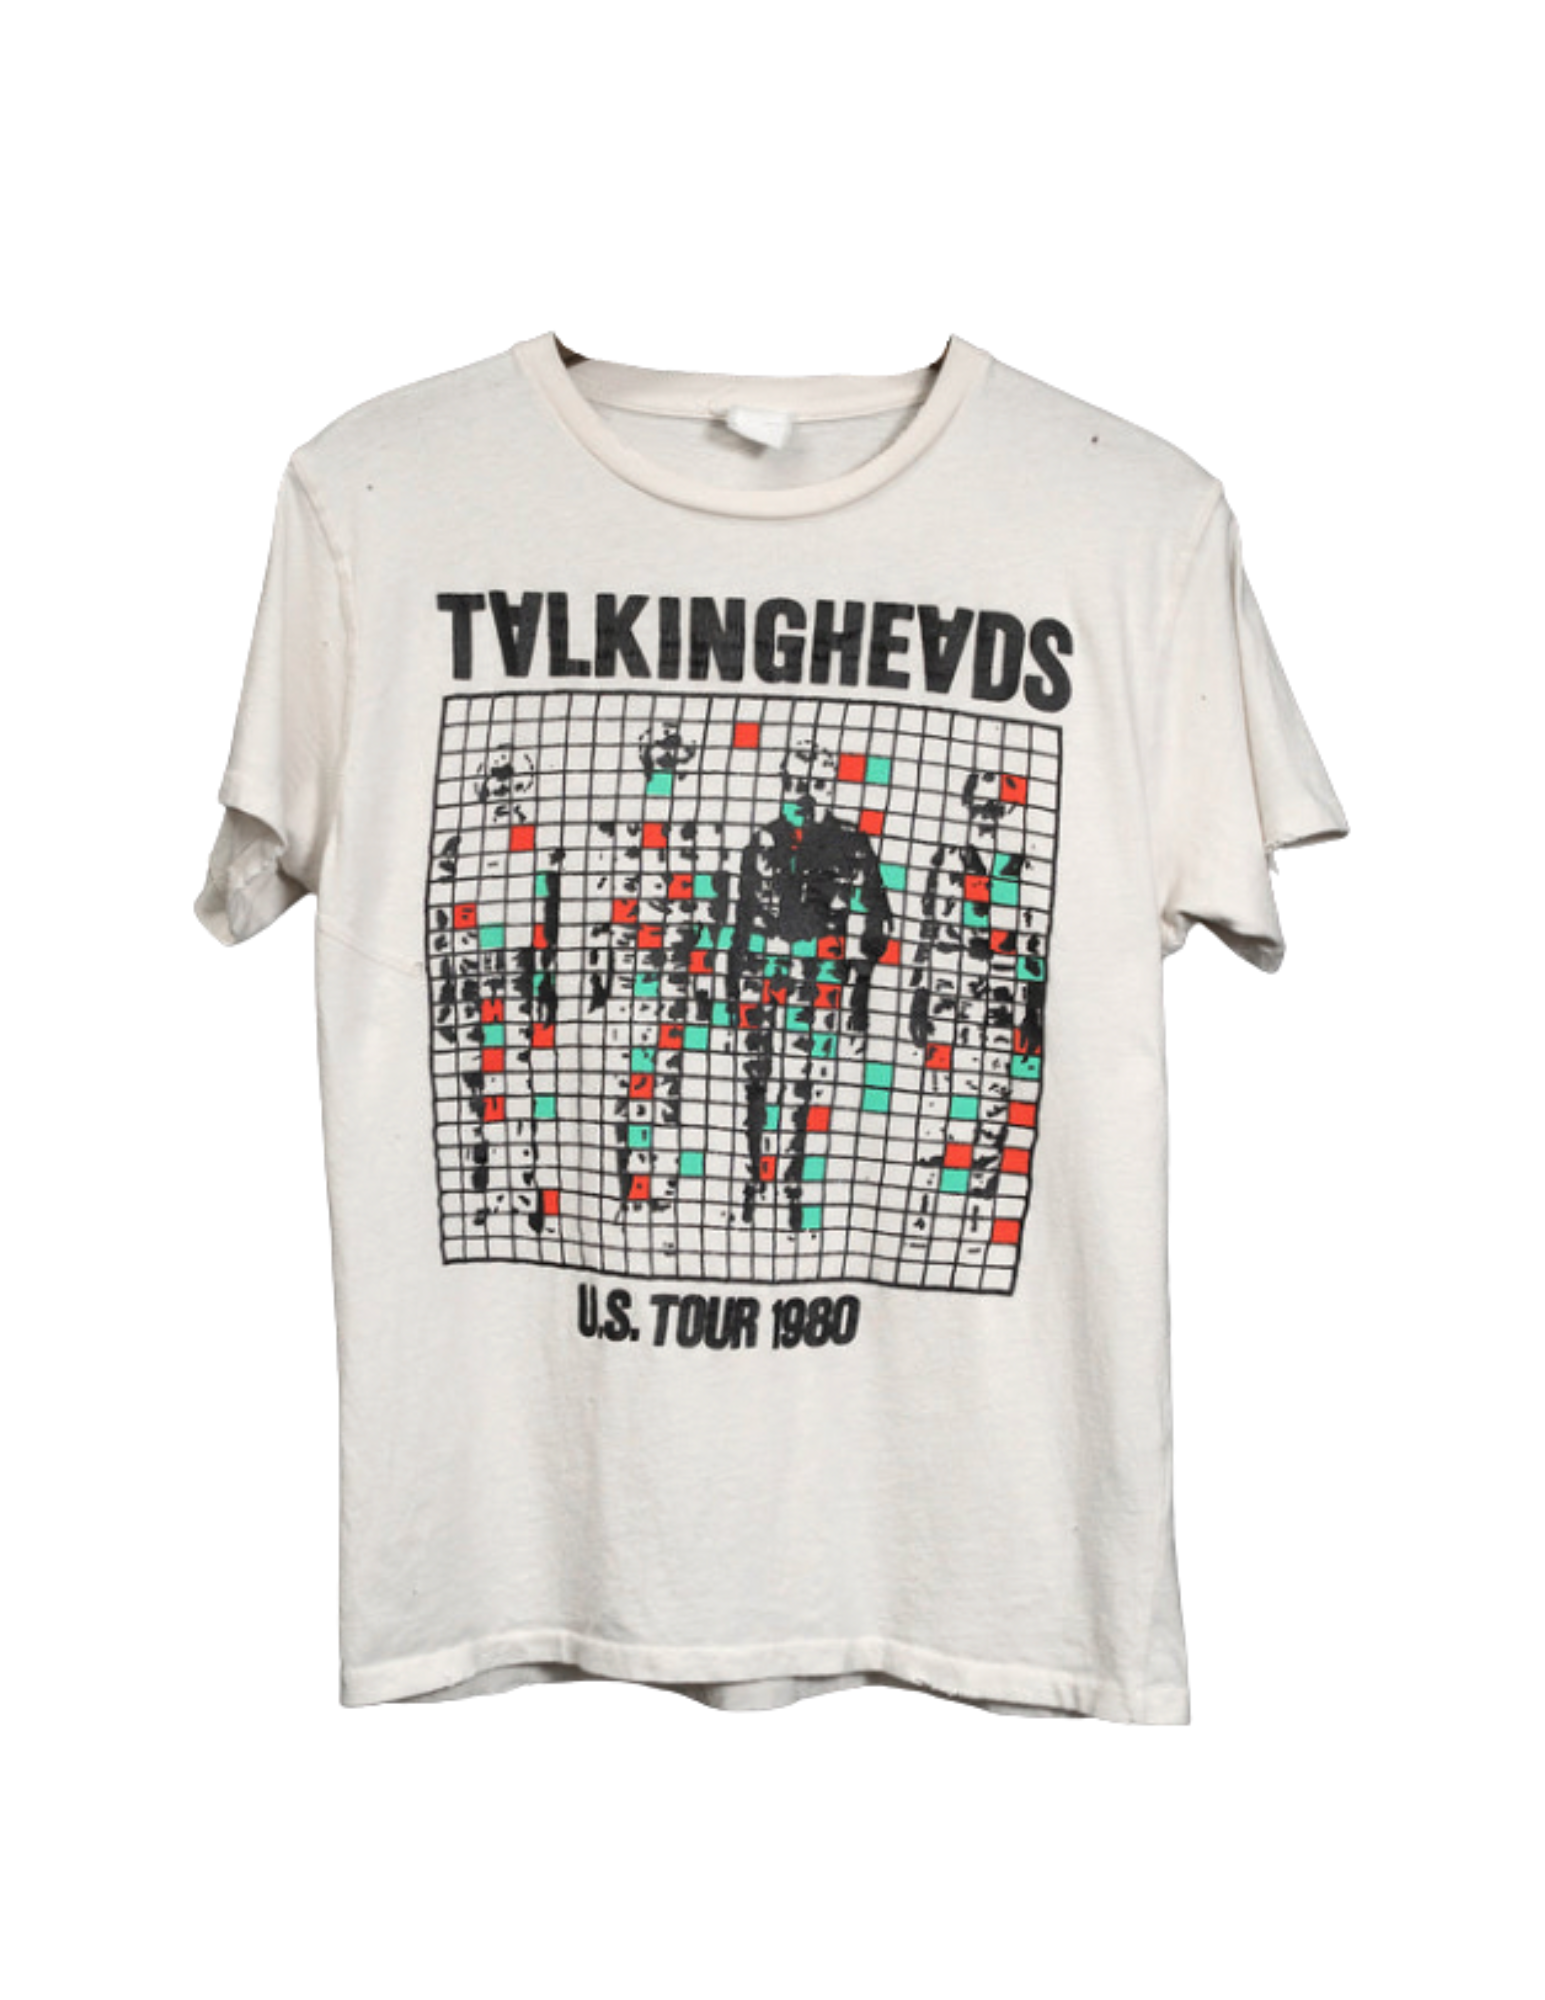 Talking Heads '80 Tee